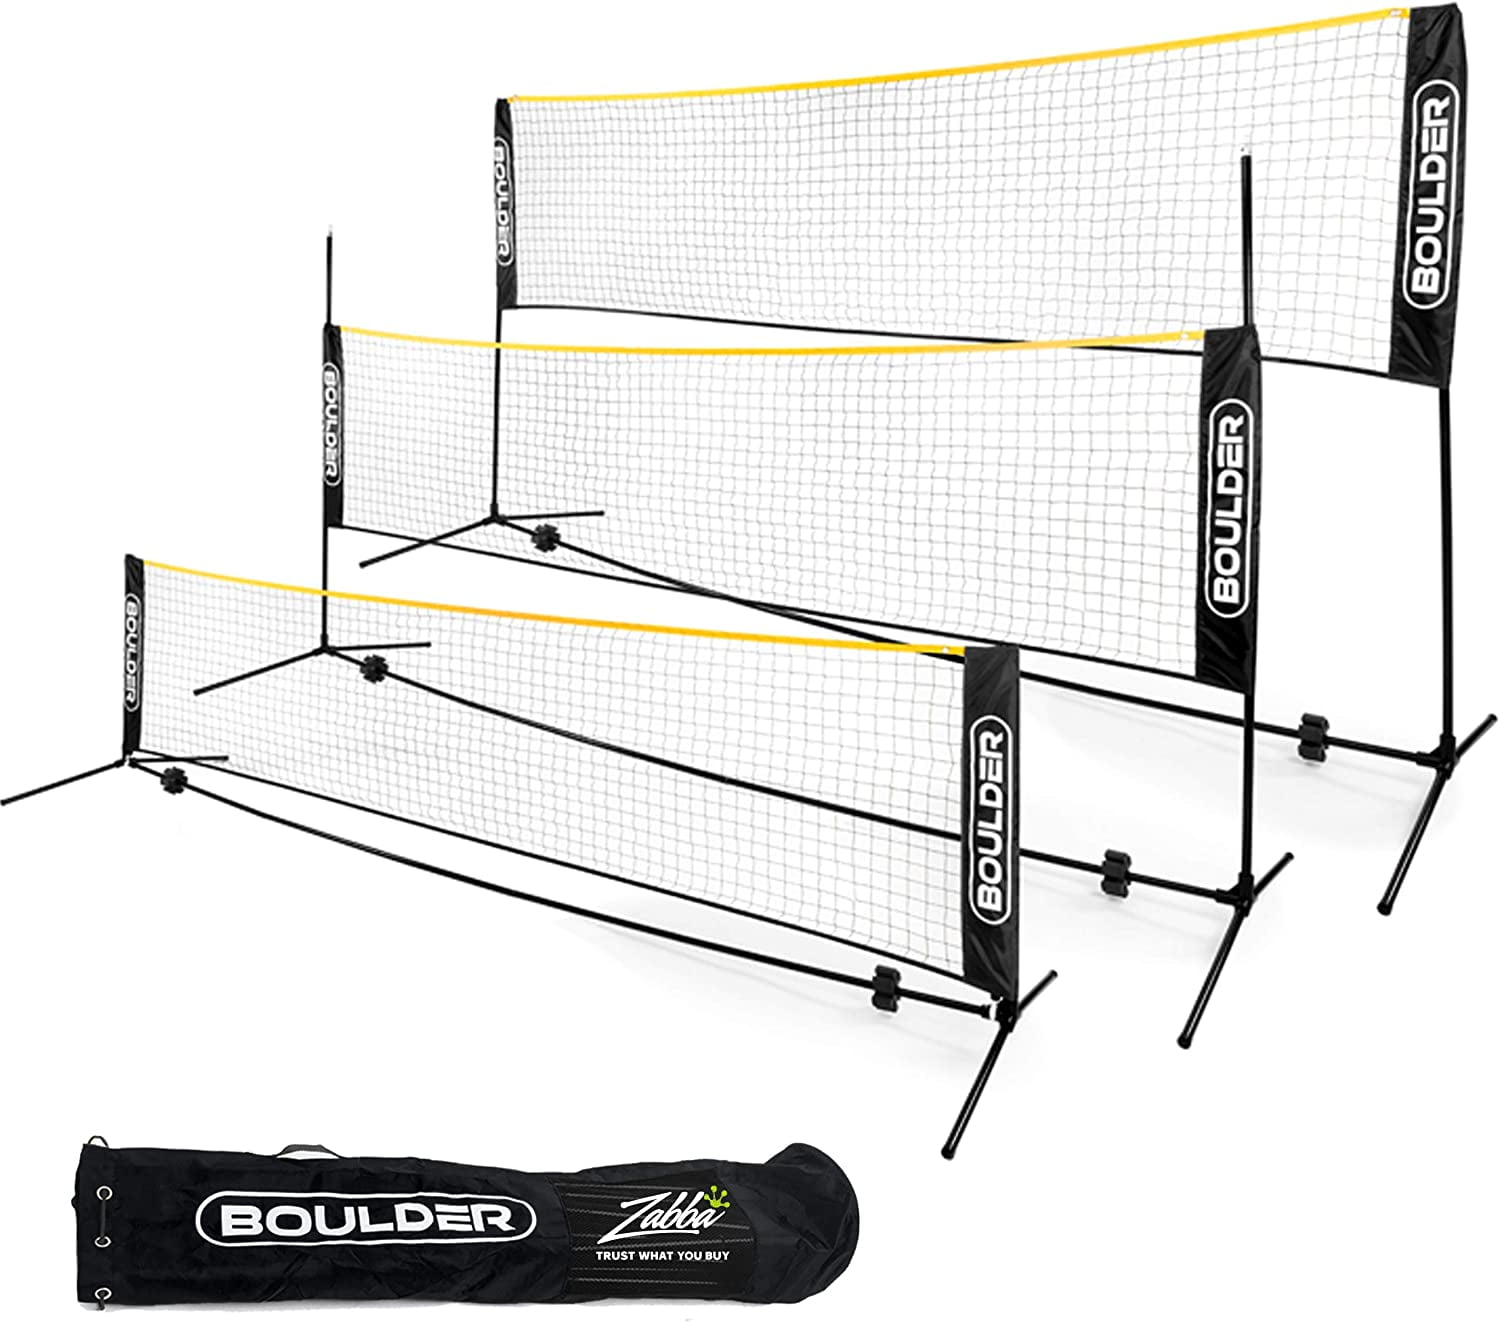 UK Portable Training Badminton Volleyball Tennis Net Outdoor Garden Beach Sport 